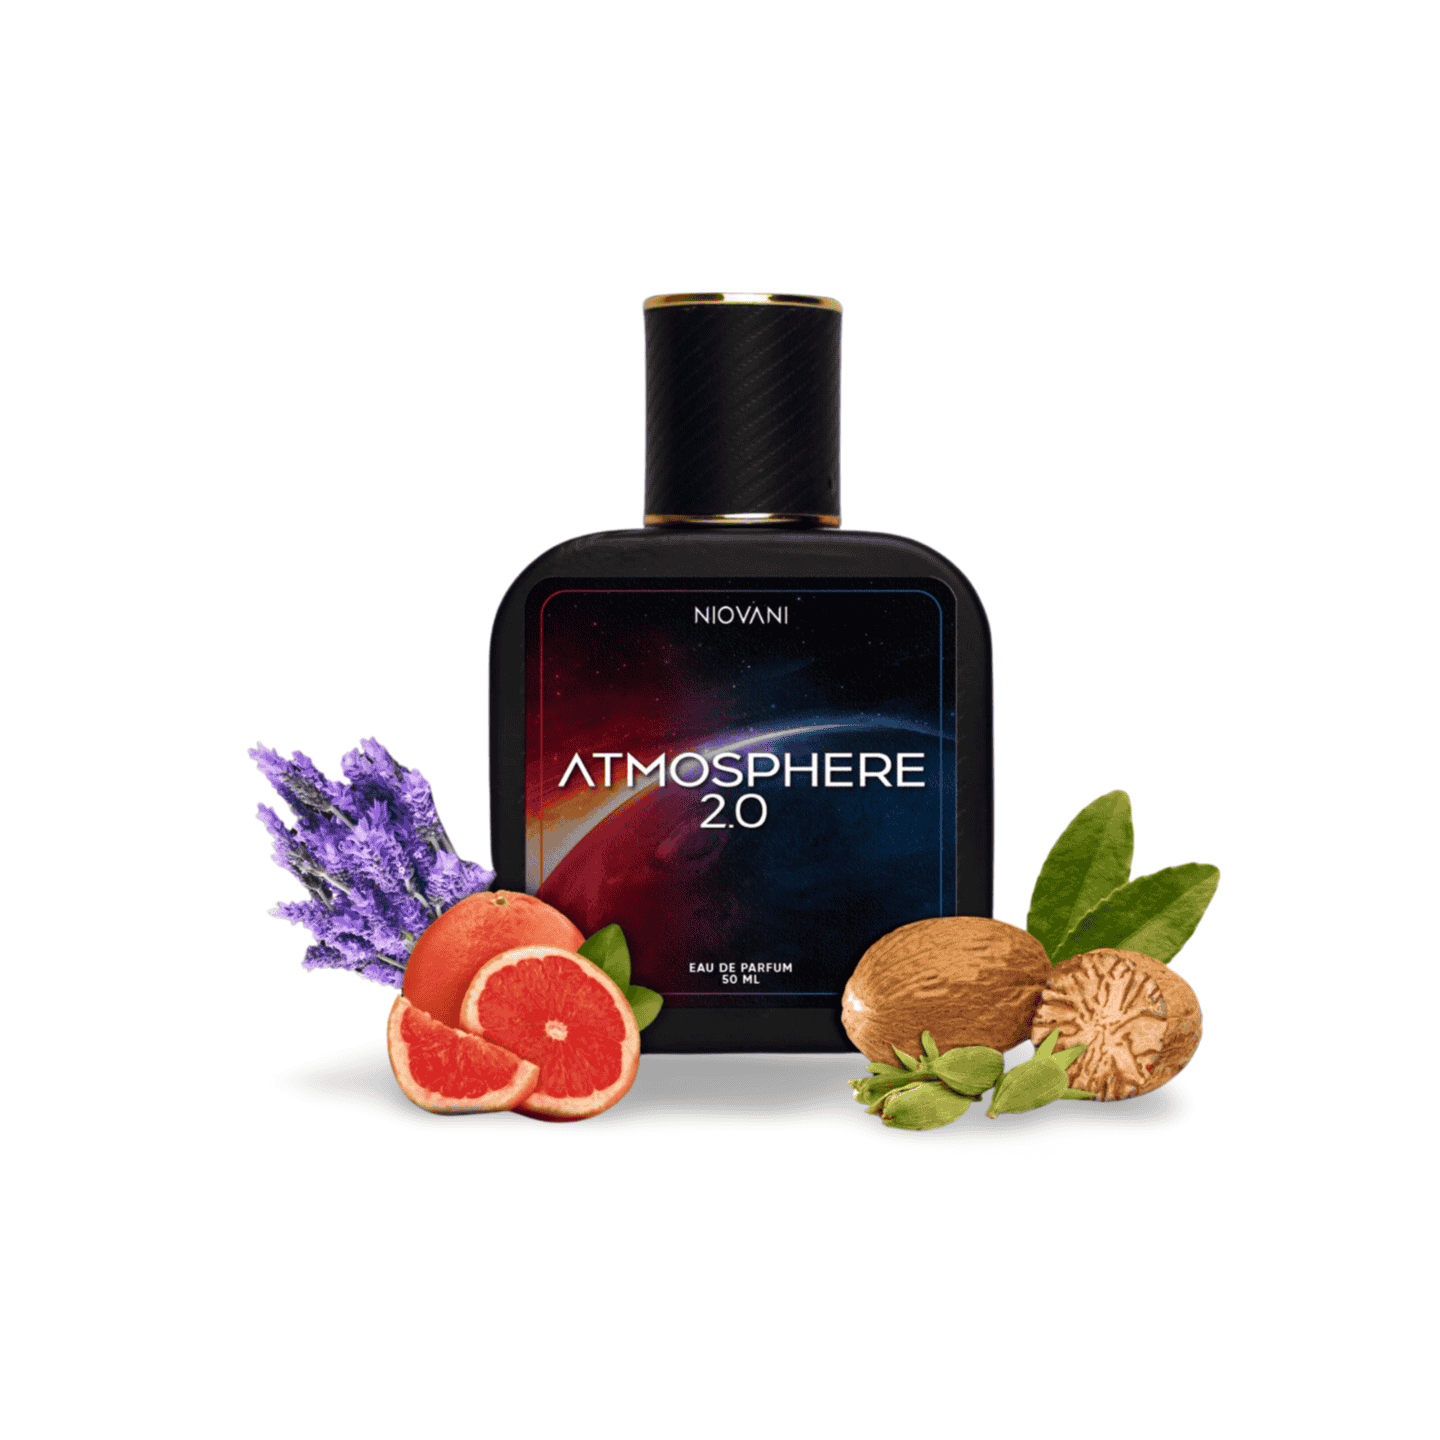 Atmosphere - Men's Fragrance Perfume